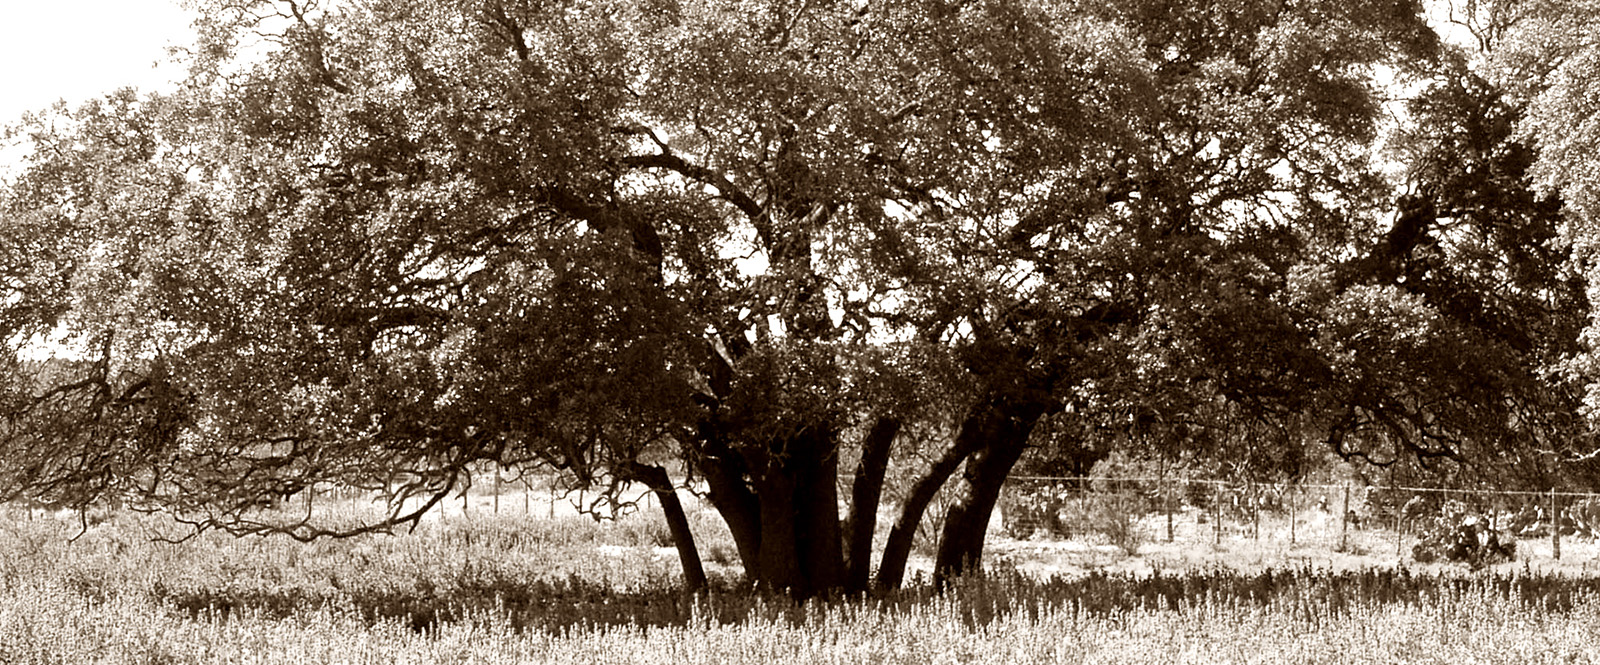 tree in a field image